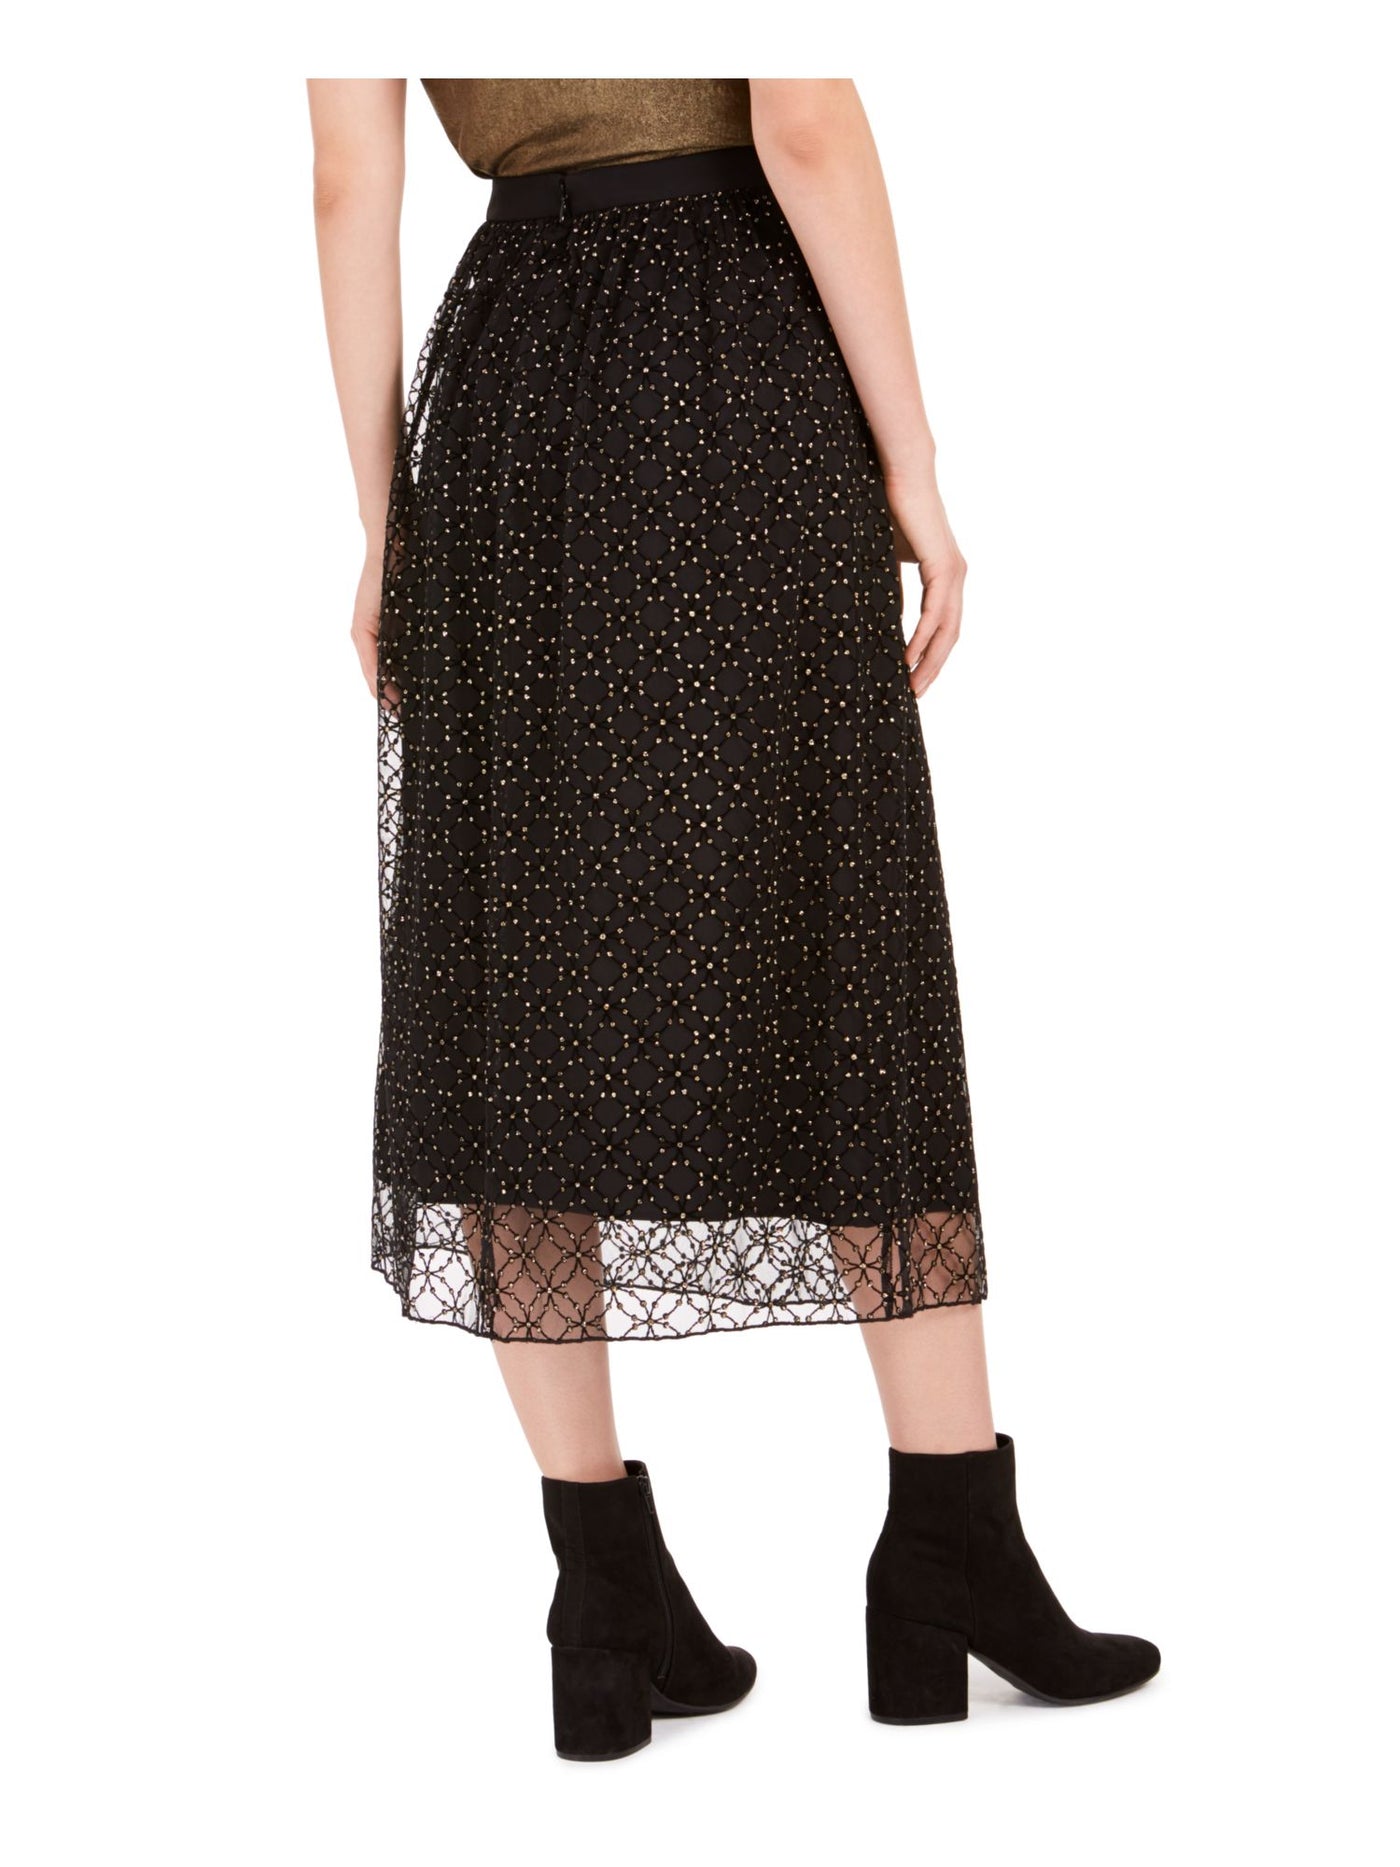 BAR III Womens Black Embellished Speckle Midi A-Line Skirt XL